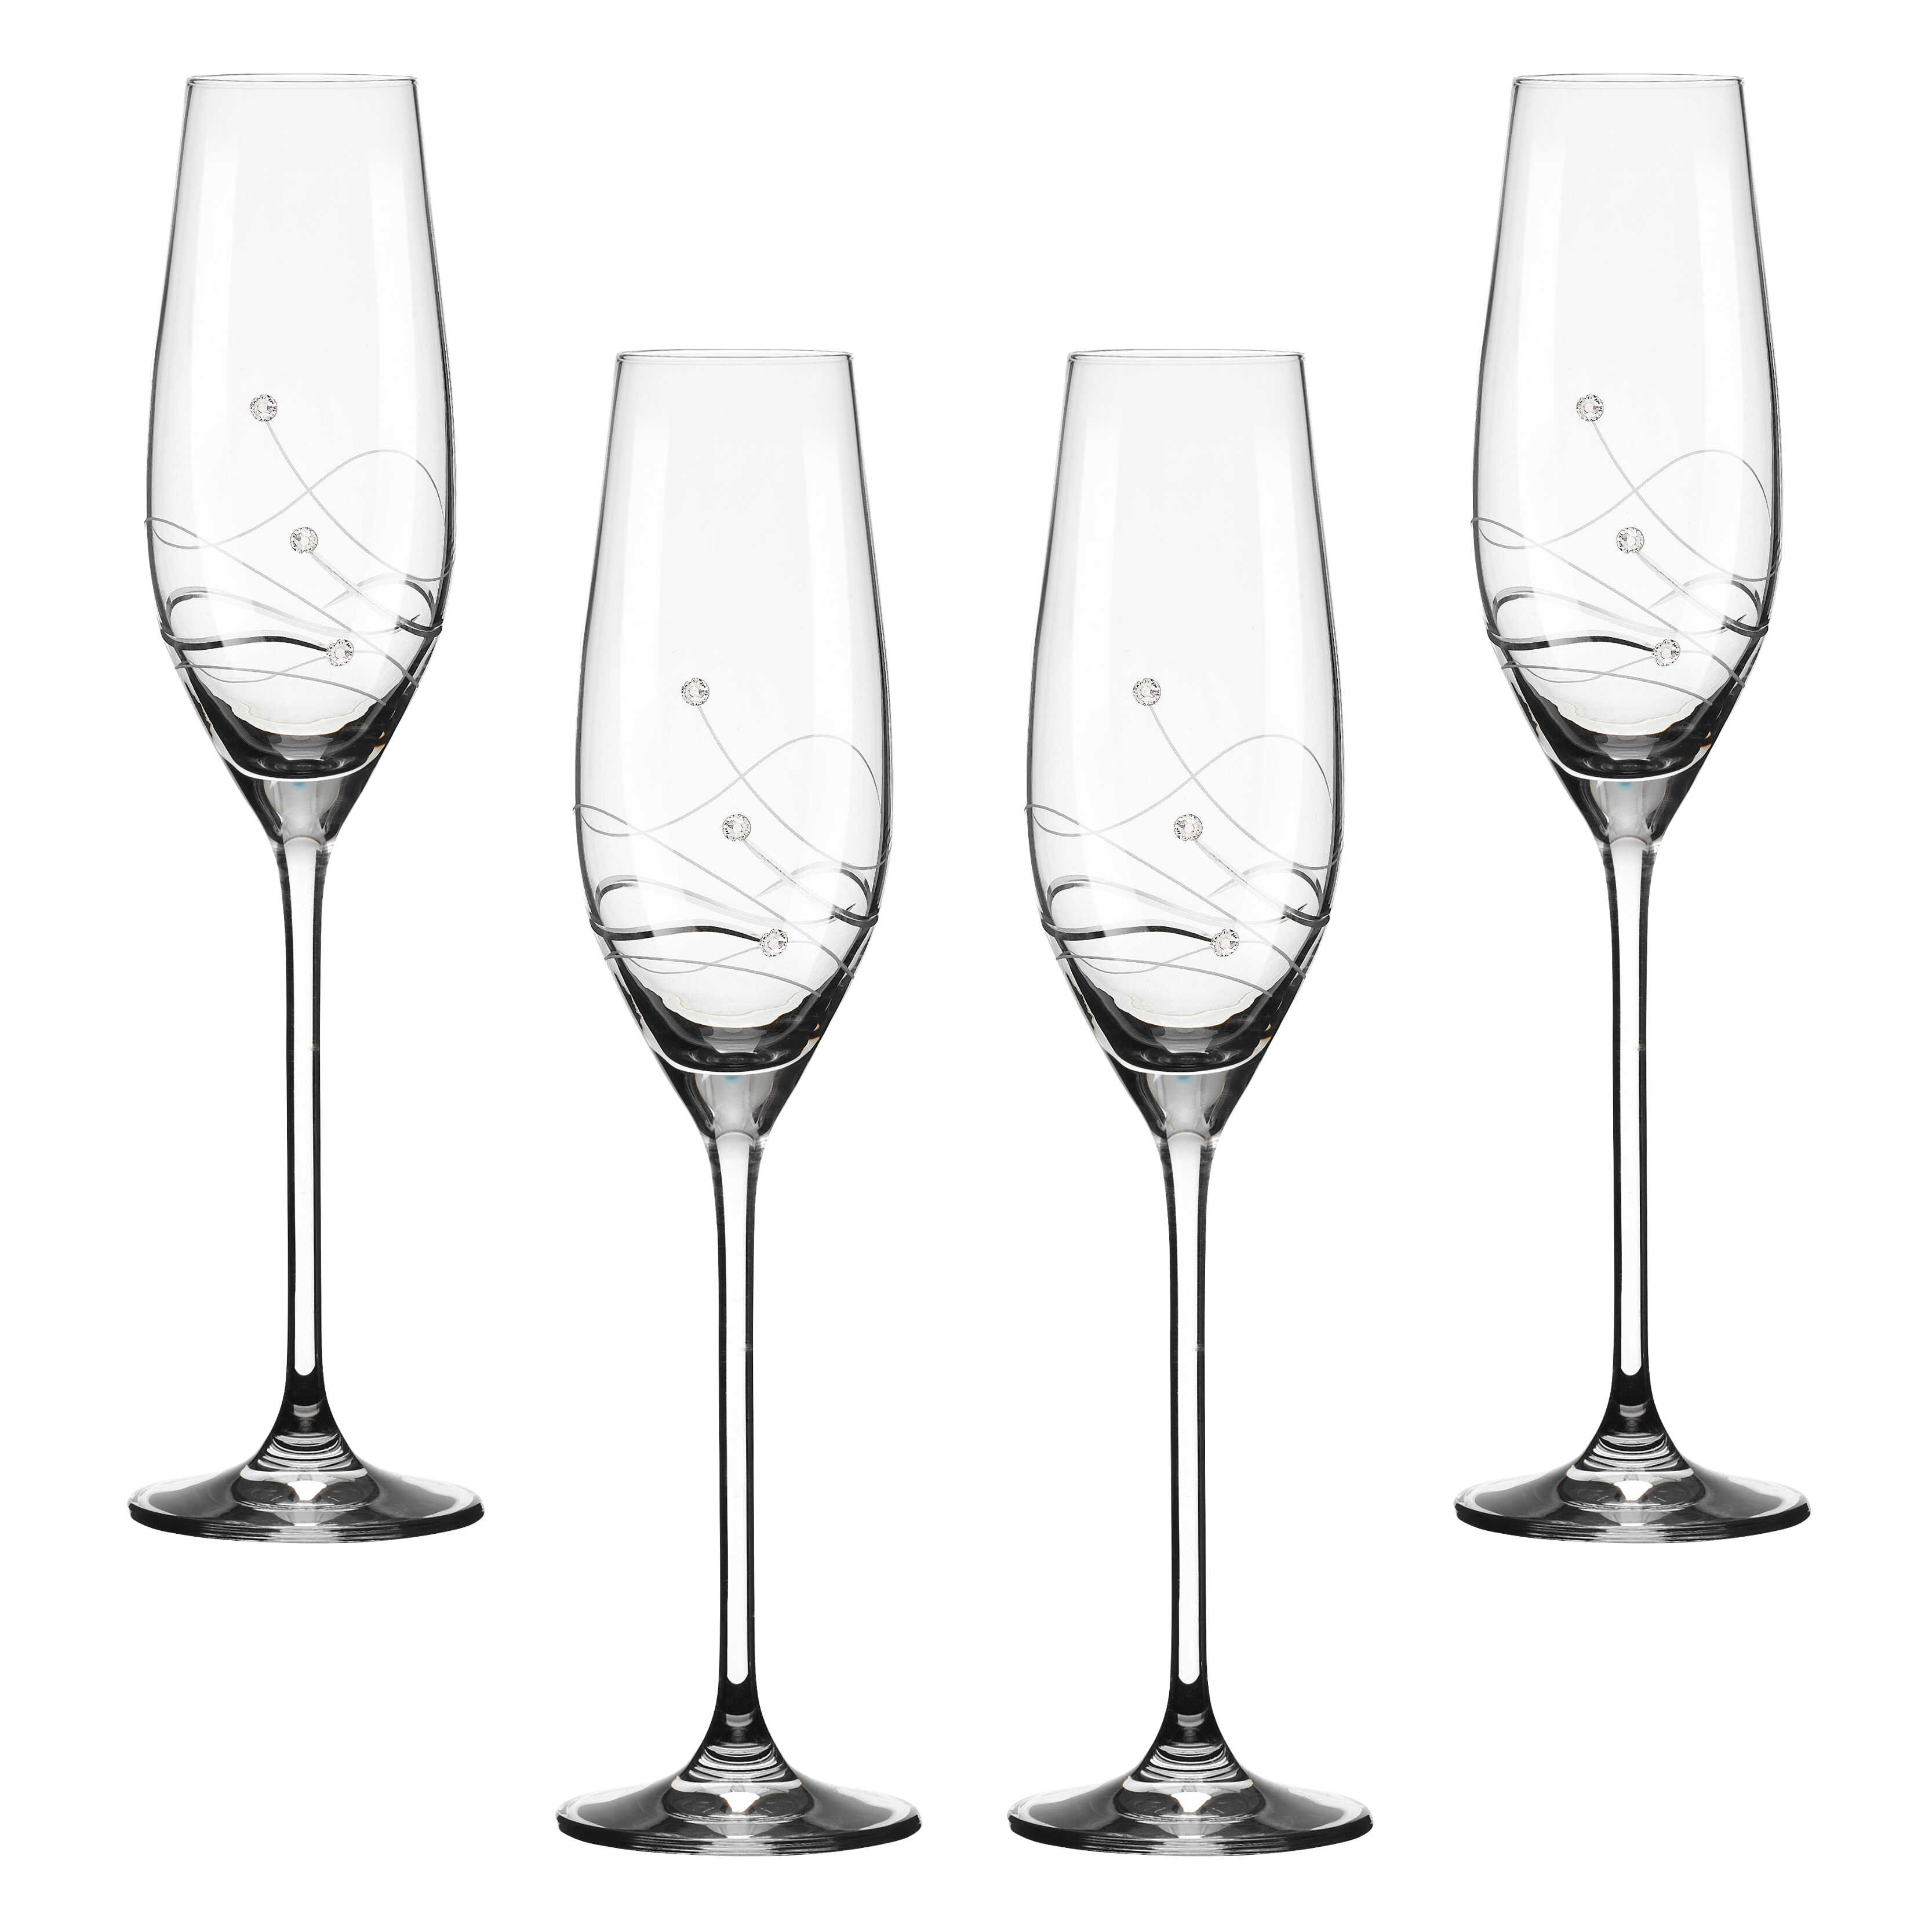 Clio Champagneglas med Swarovski krystaller - 4 stk. 